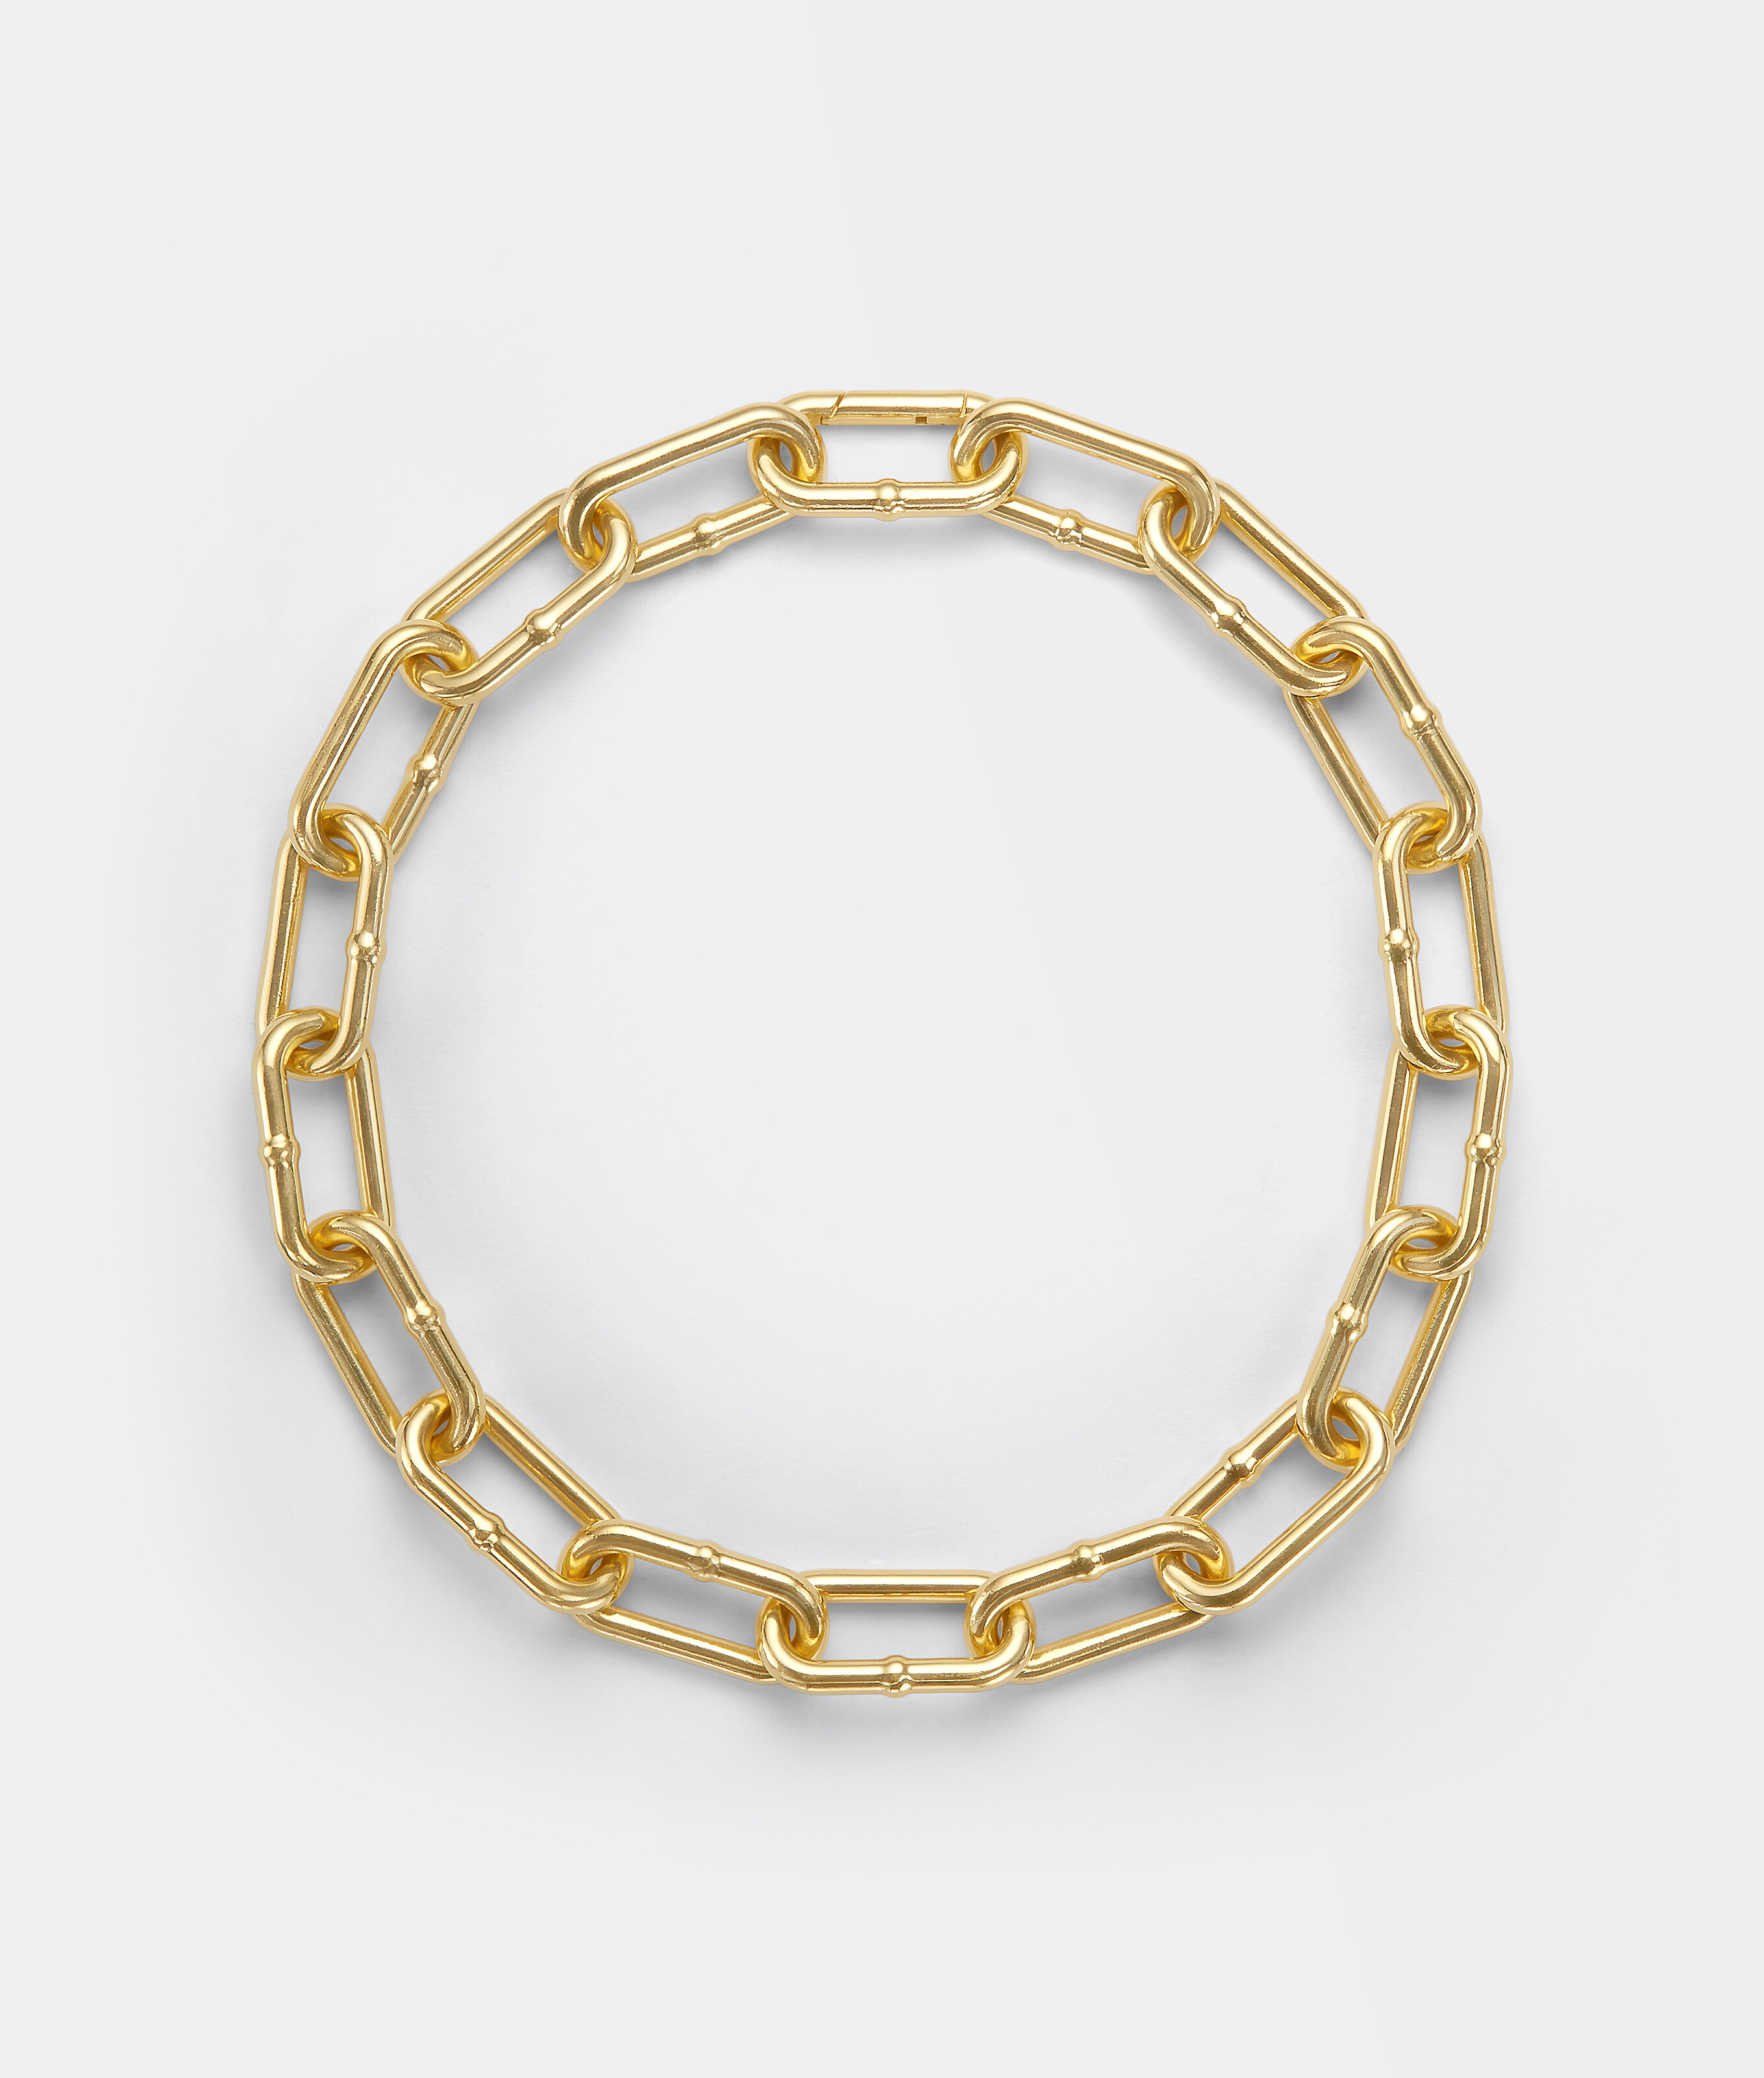 Bottega Veneta Gold-Plated Necklace